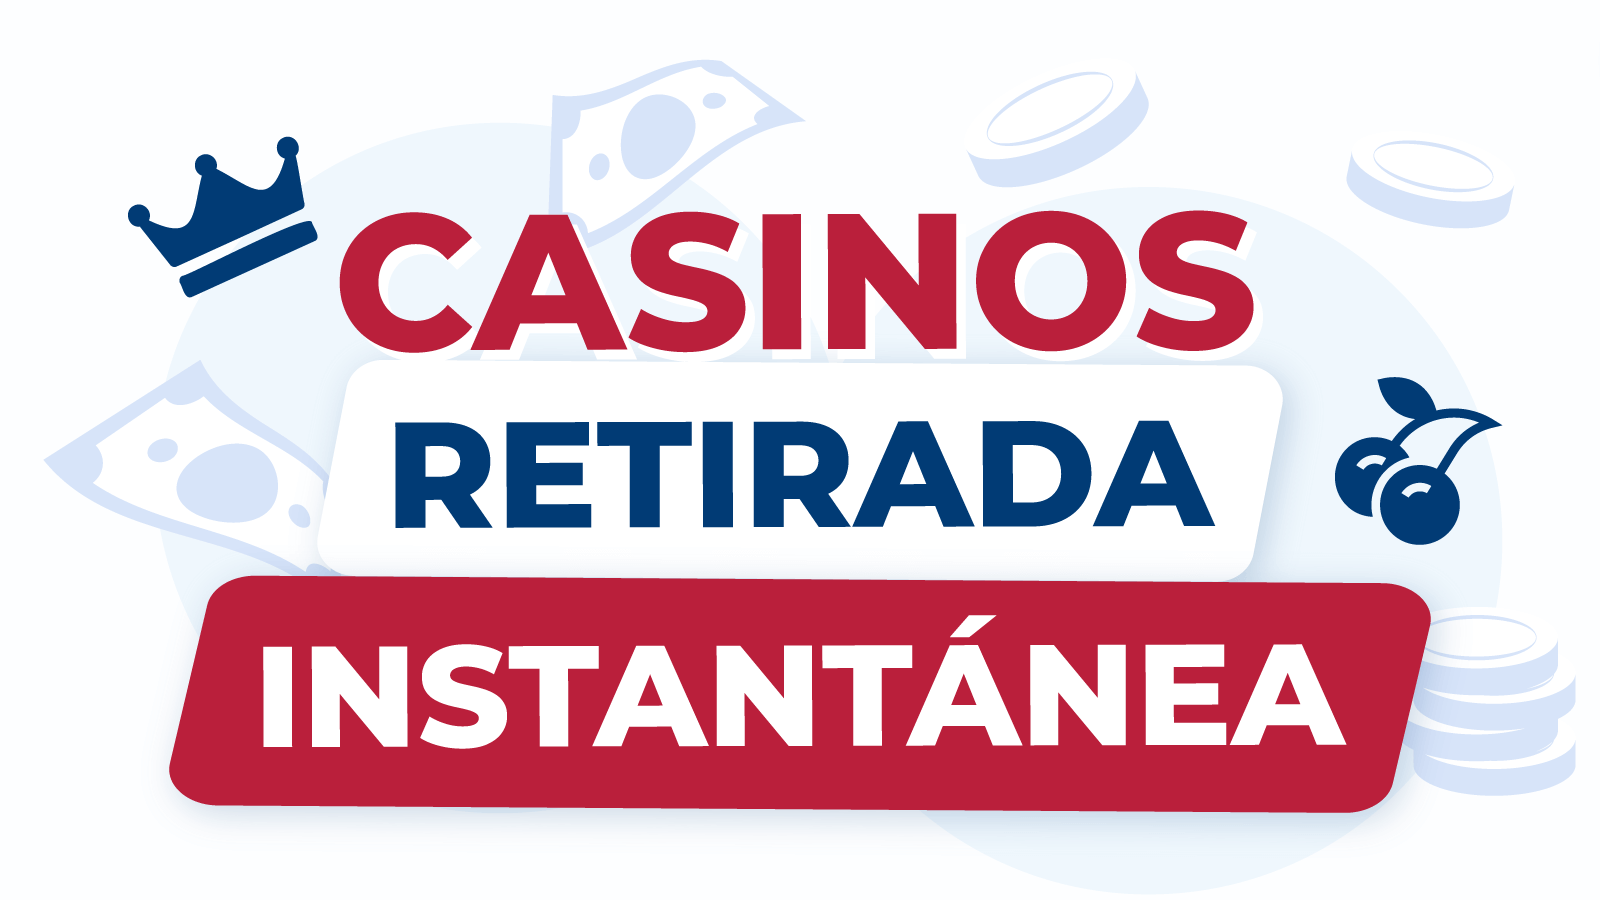 Casinos Retirada Instantánea